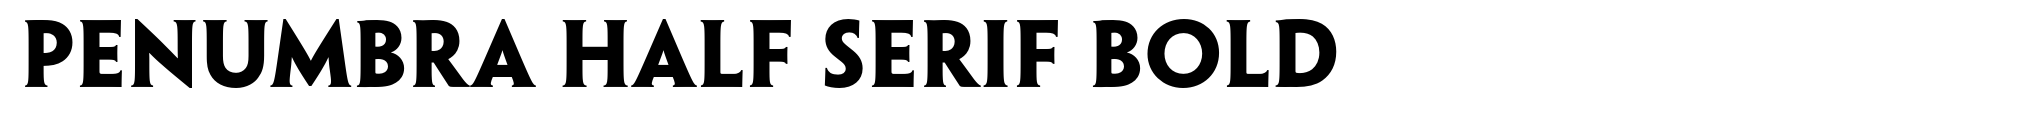 Penumbra Half Serif Bold image